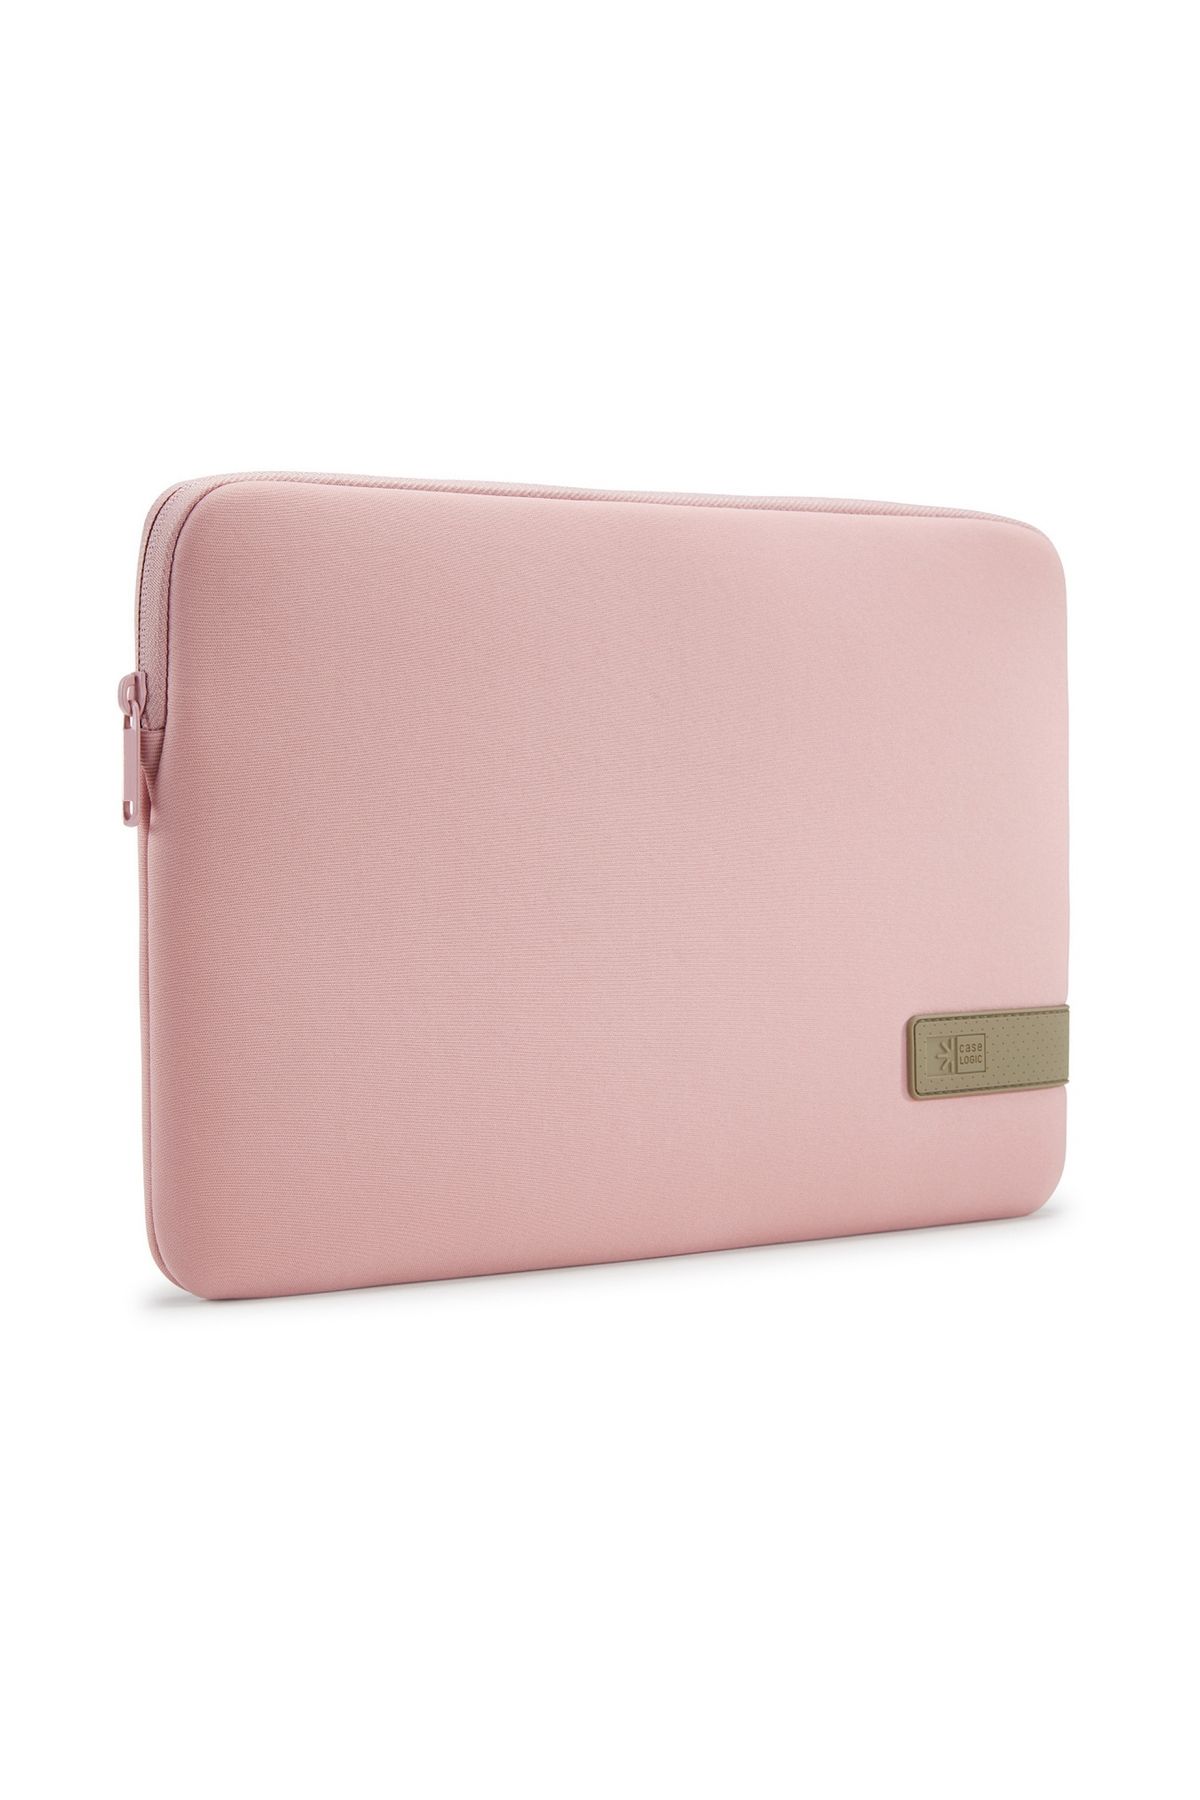 Case Logic Reflect NoteBook Kılıfı 13.3 inç - Pink/Mermaid